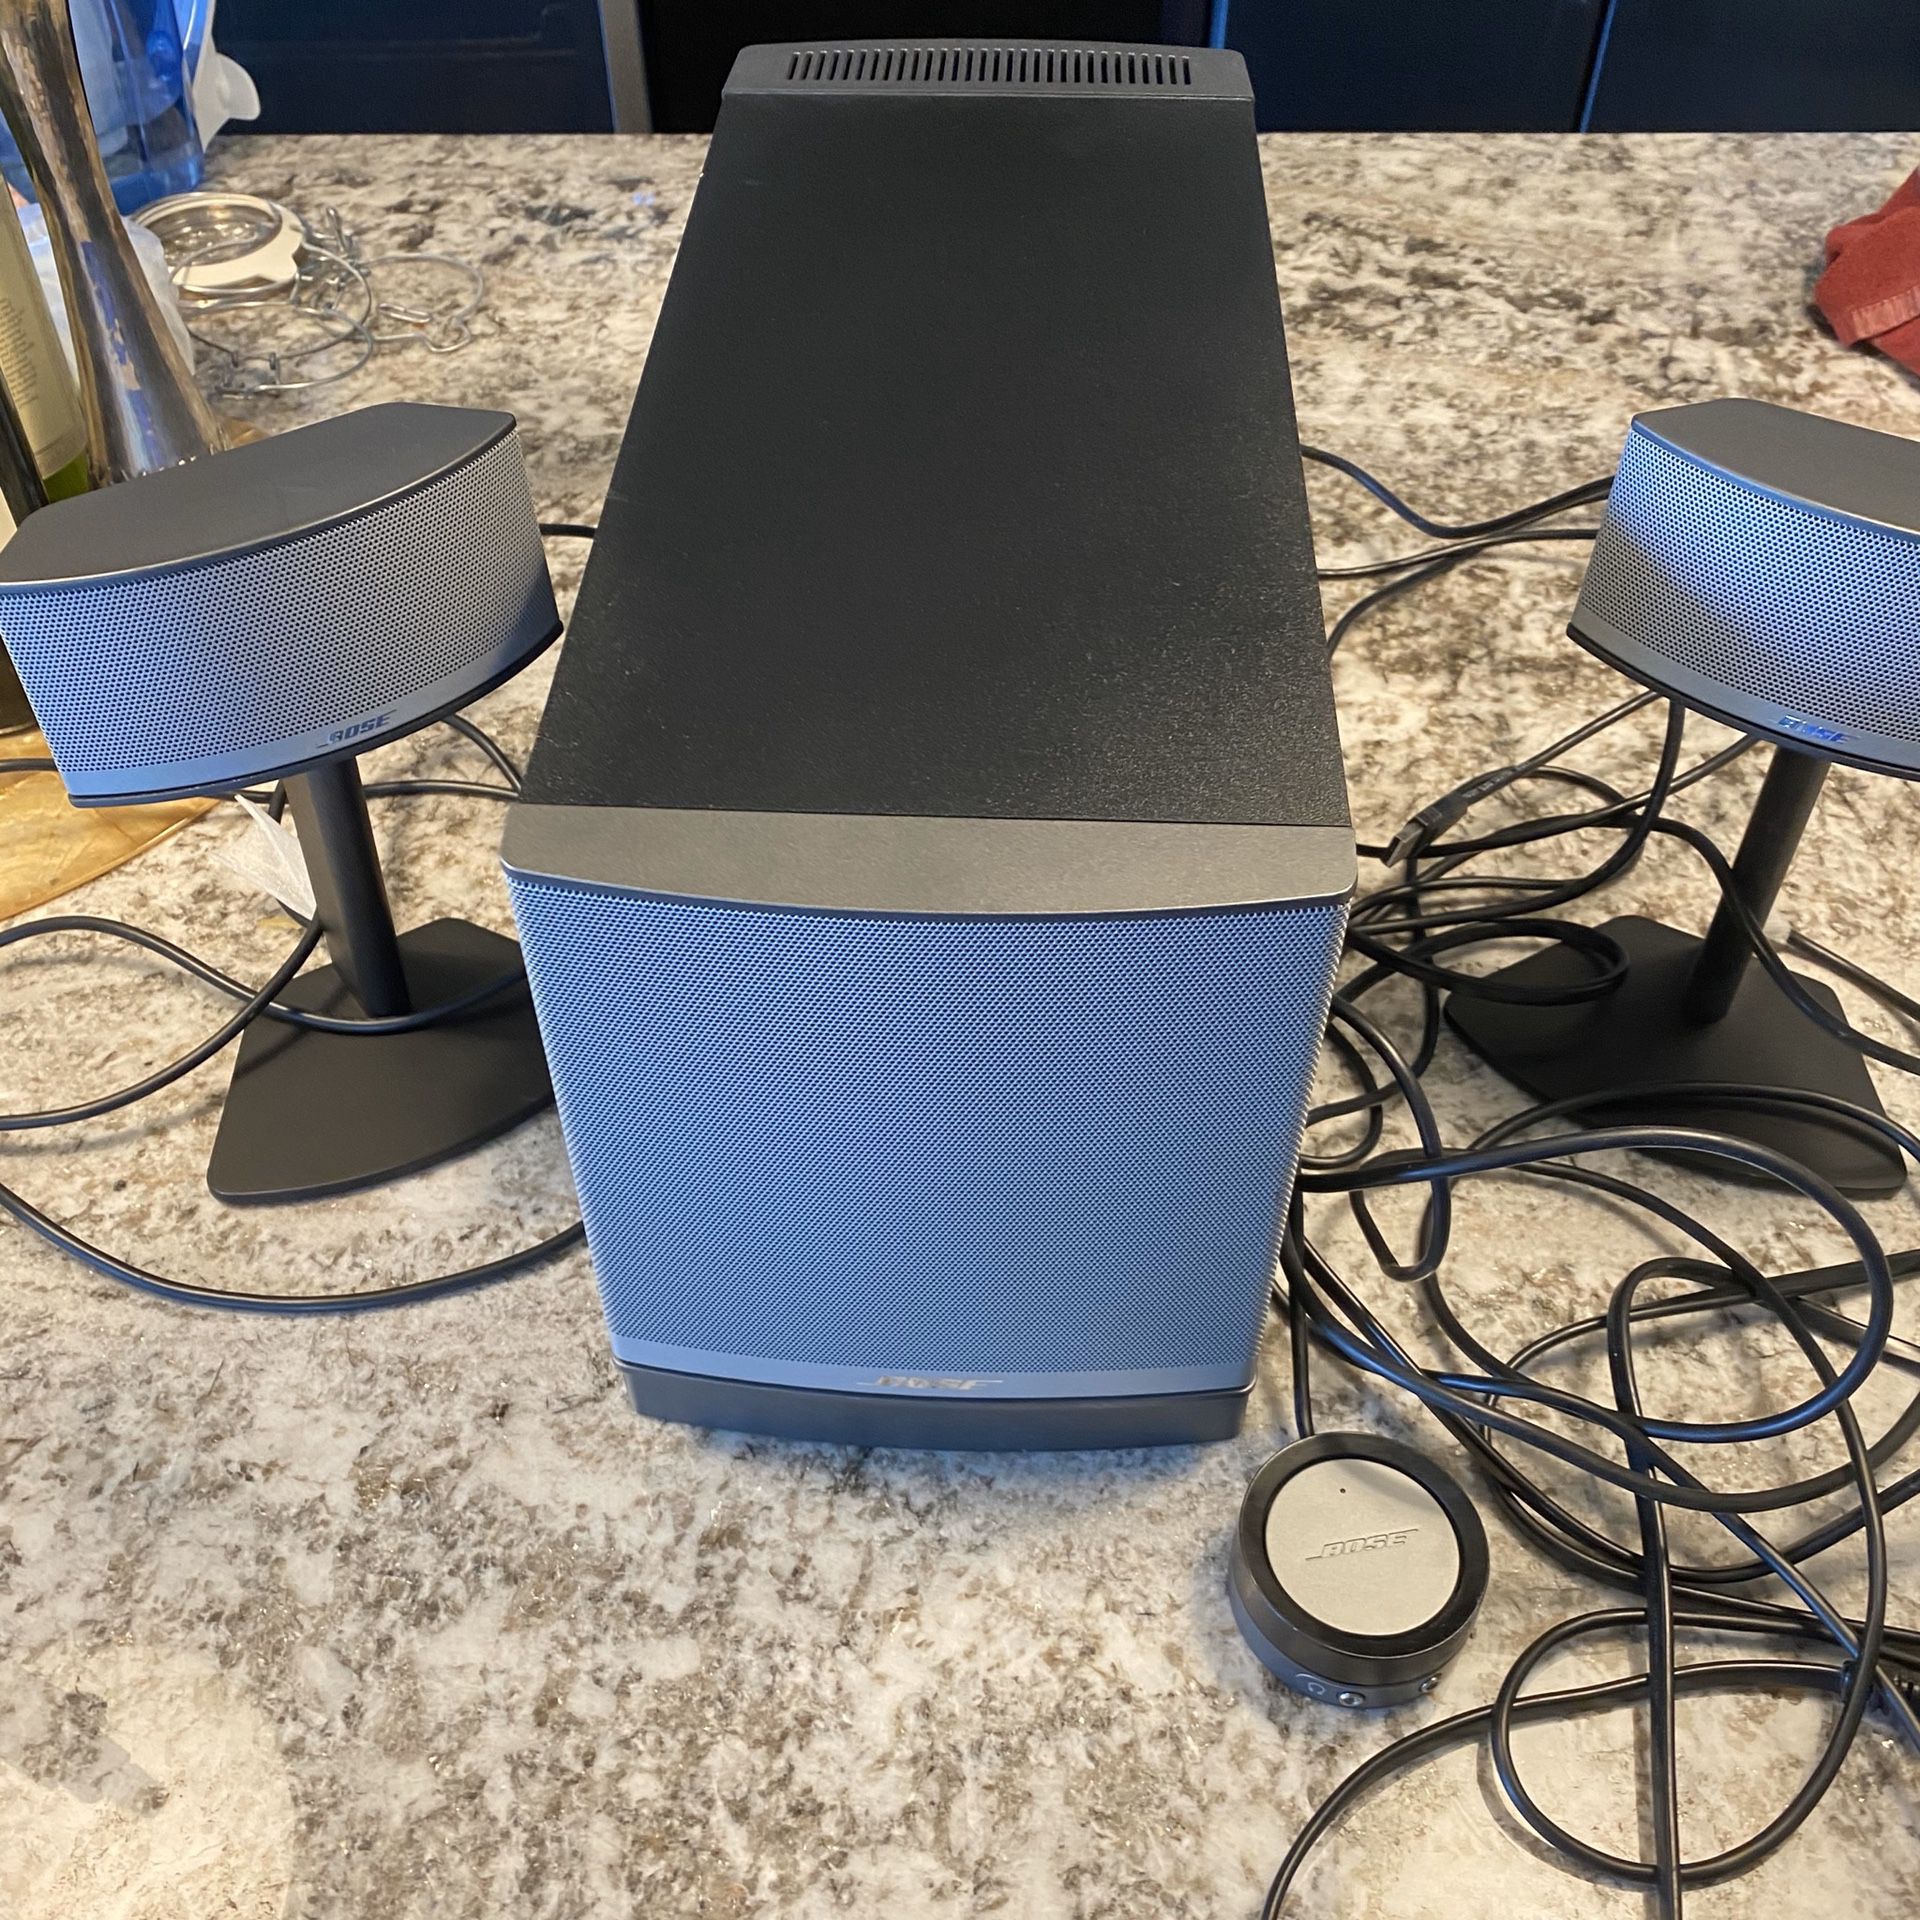 Bose companion 5 multimedia speakers system